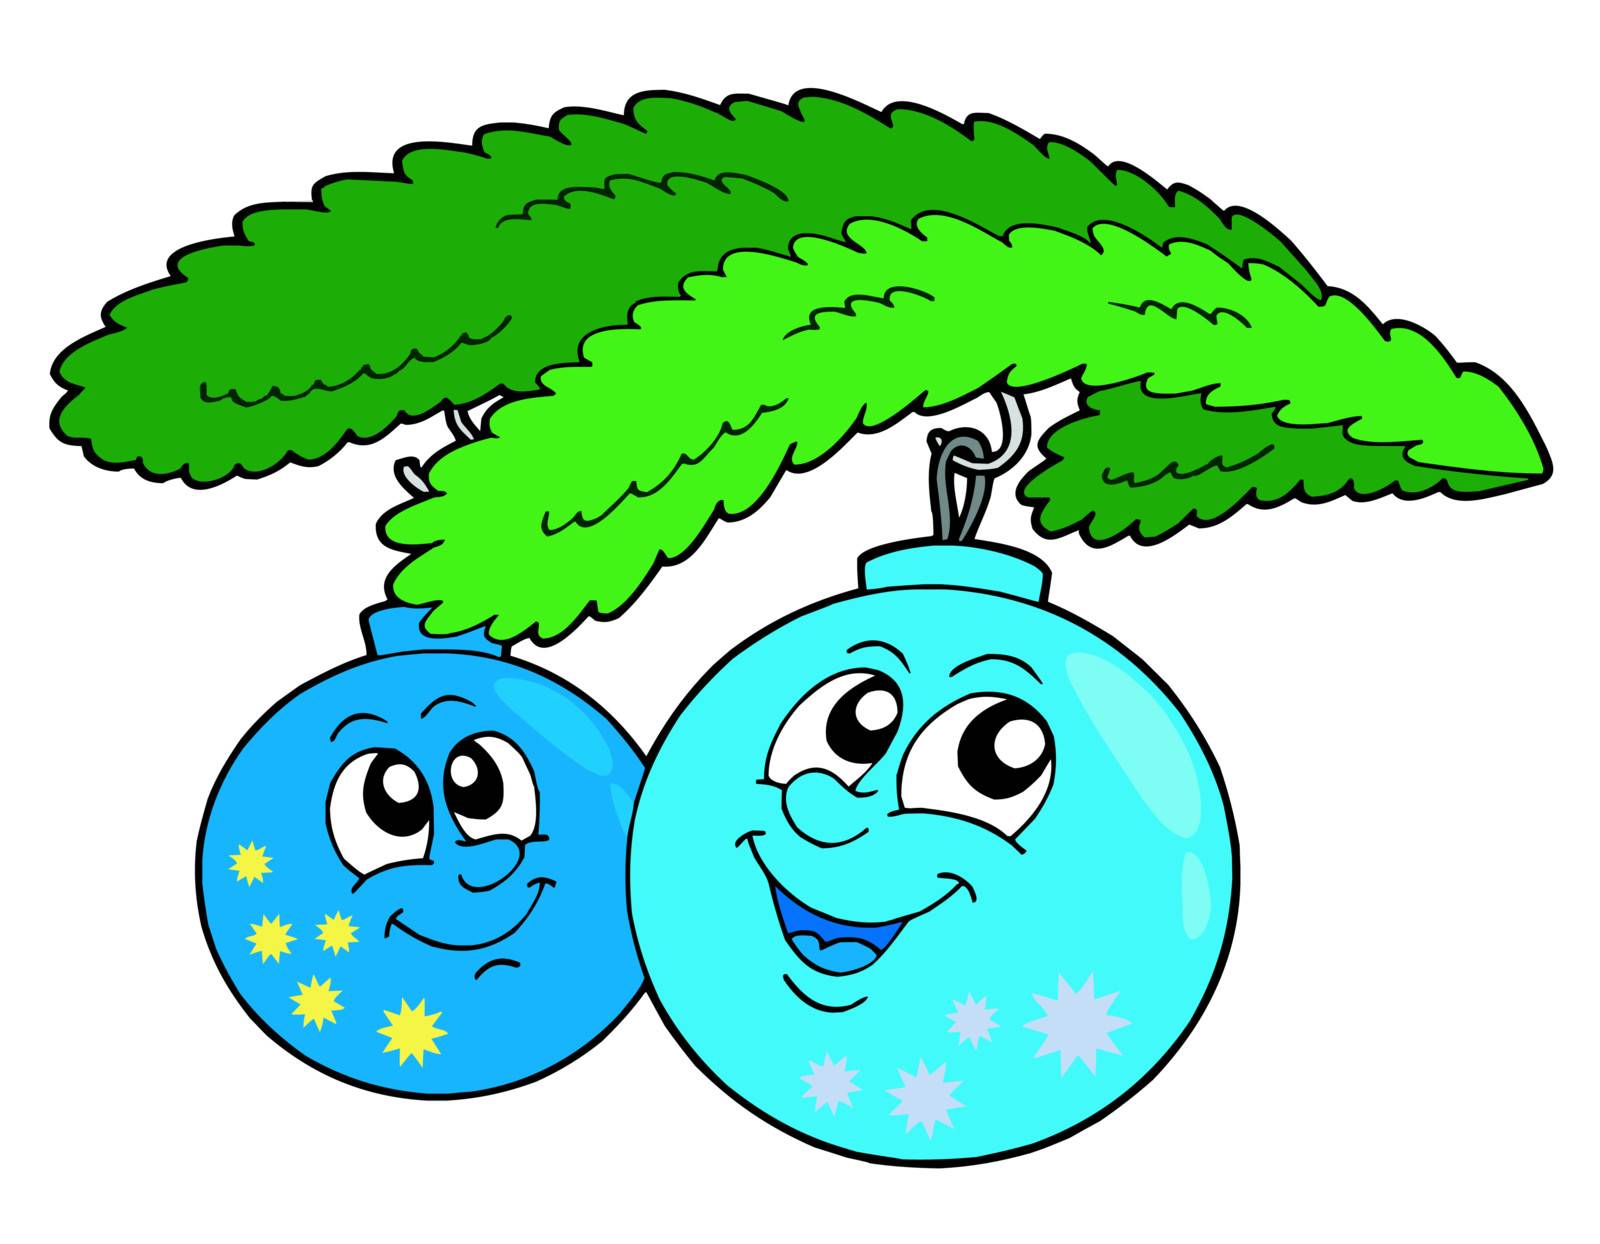 Cute blue Christmas globes - vector illustration.